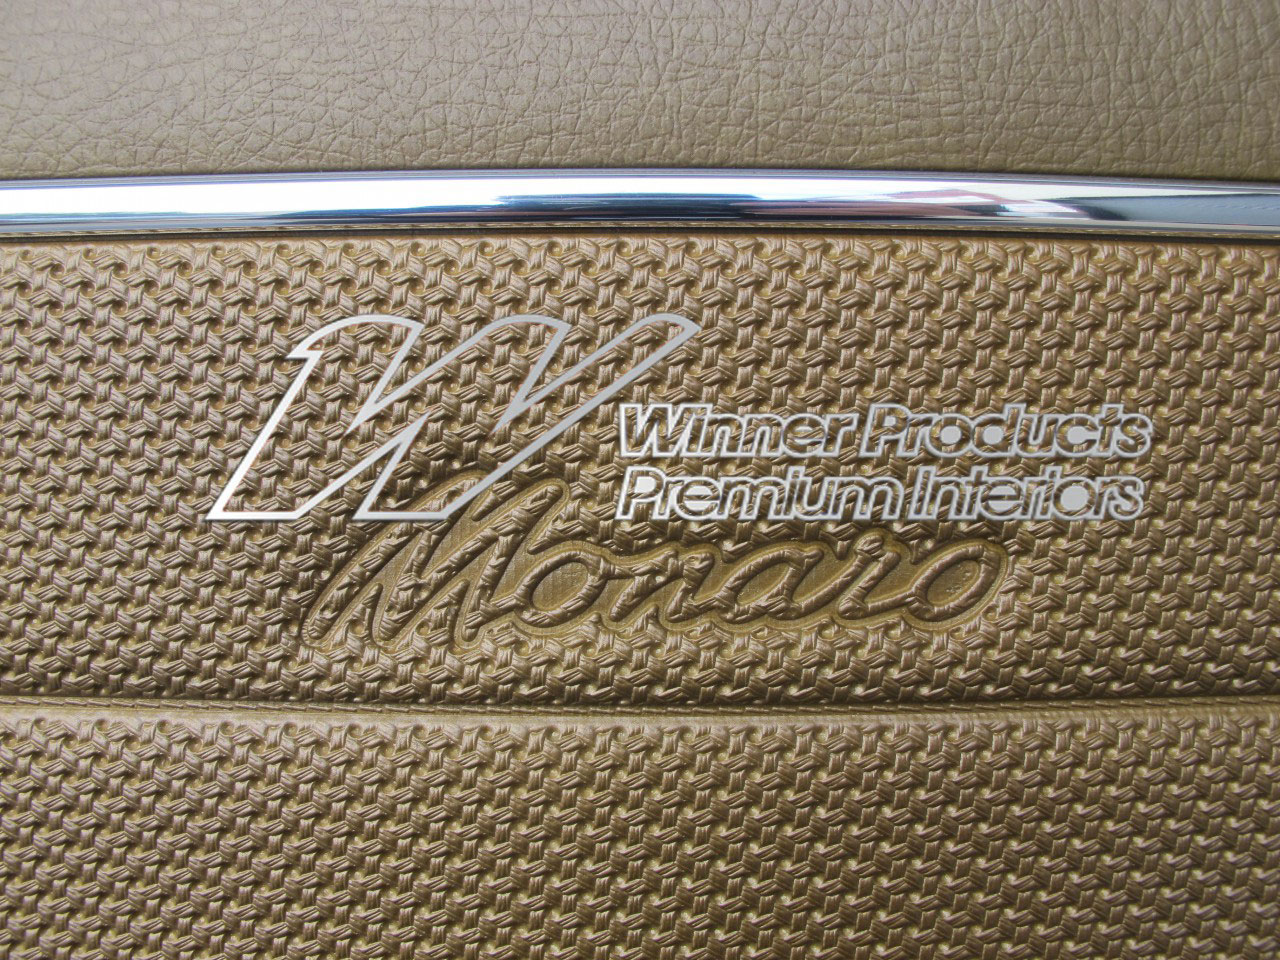 Holden Monaro HT Monaro GTS Coupe 11Y Antique Gold & Houndstooth Door Trims (Image 3 of 4)